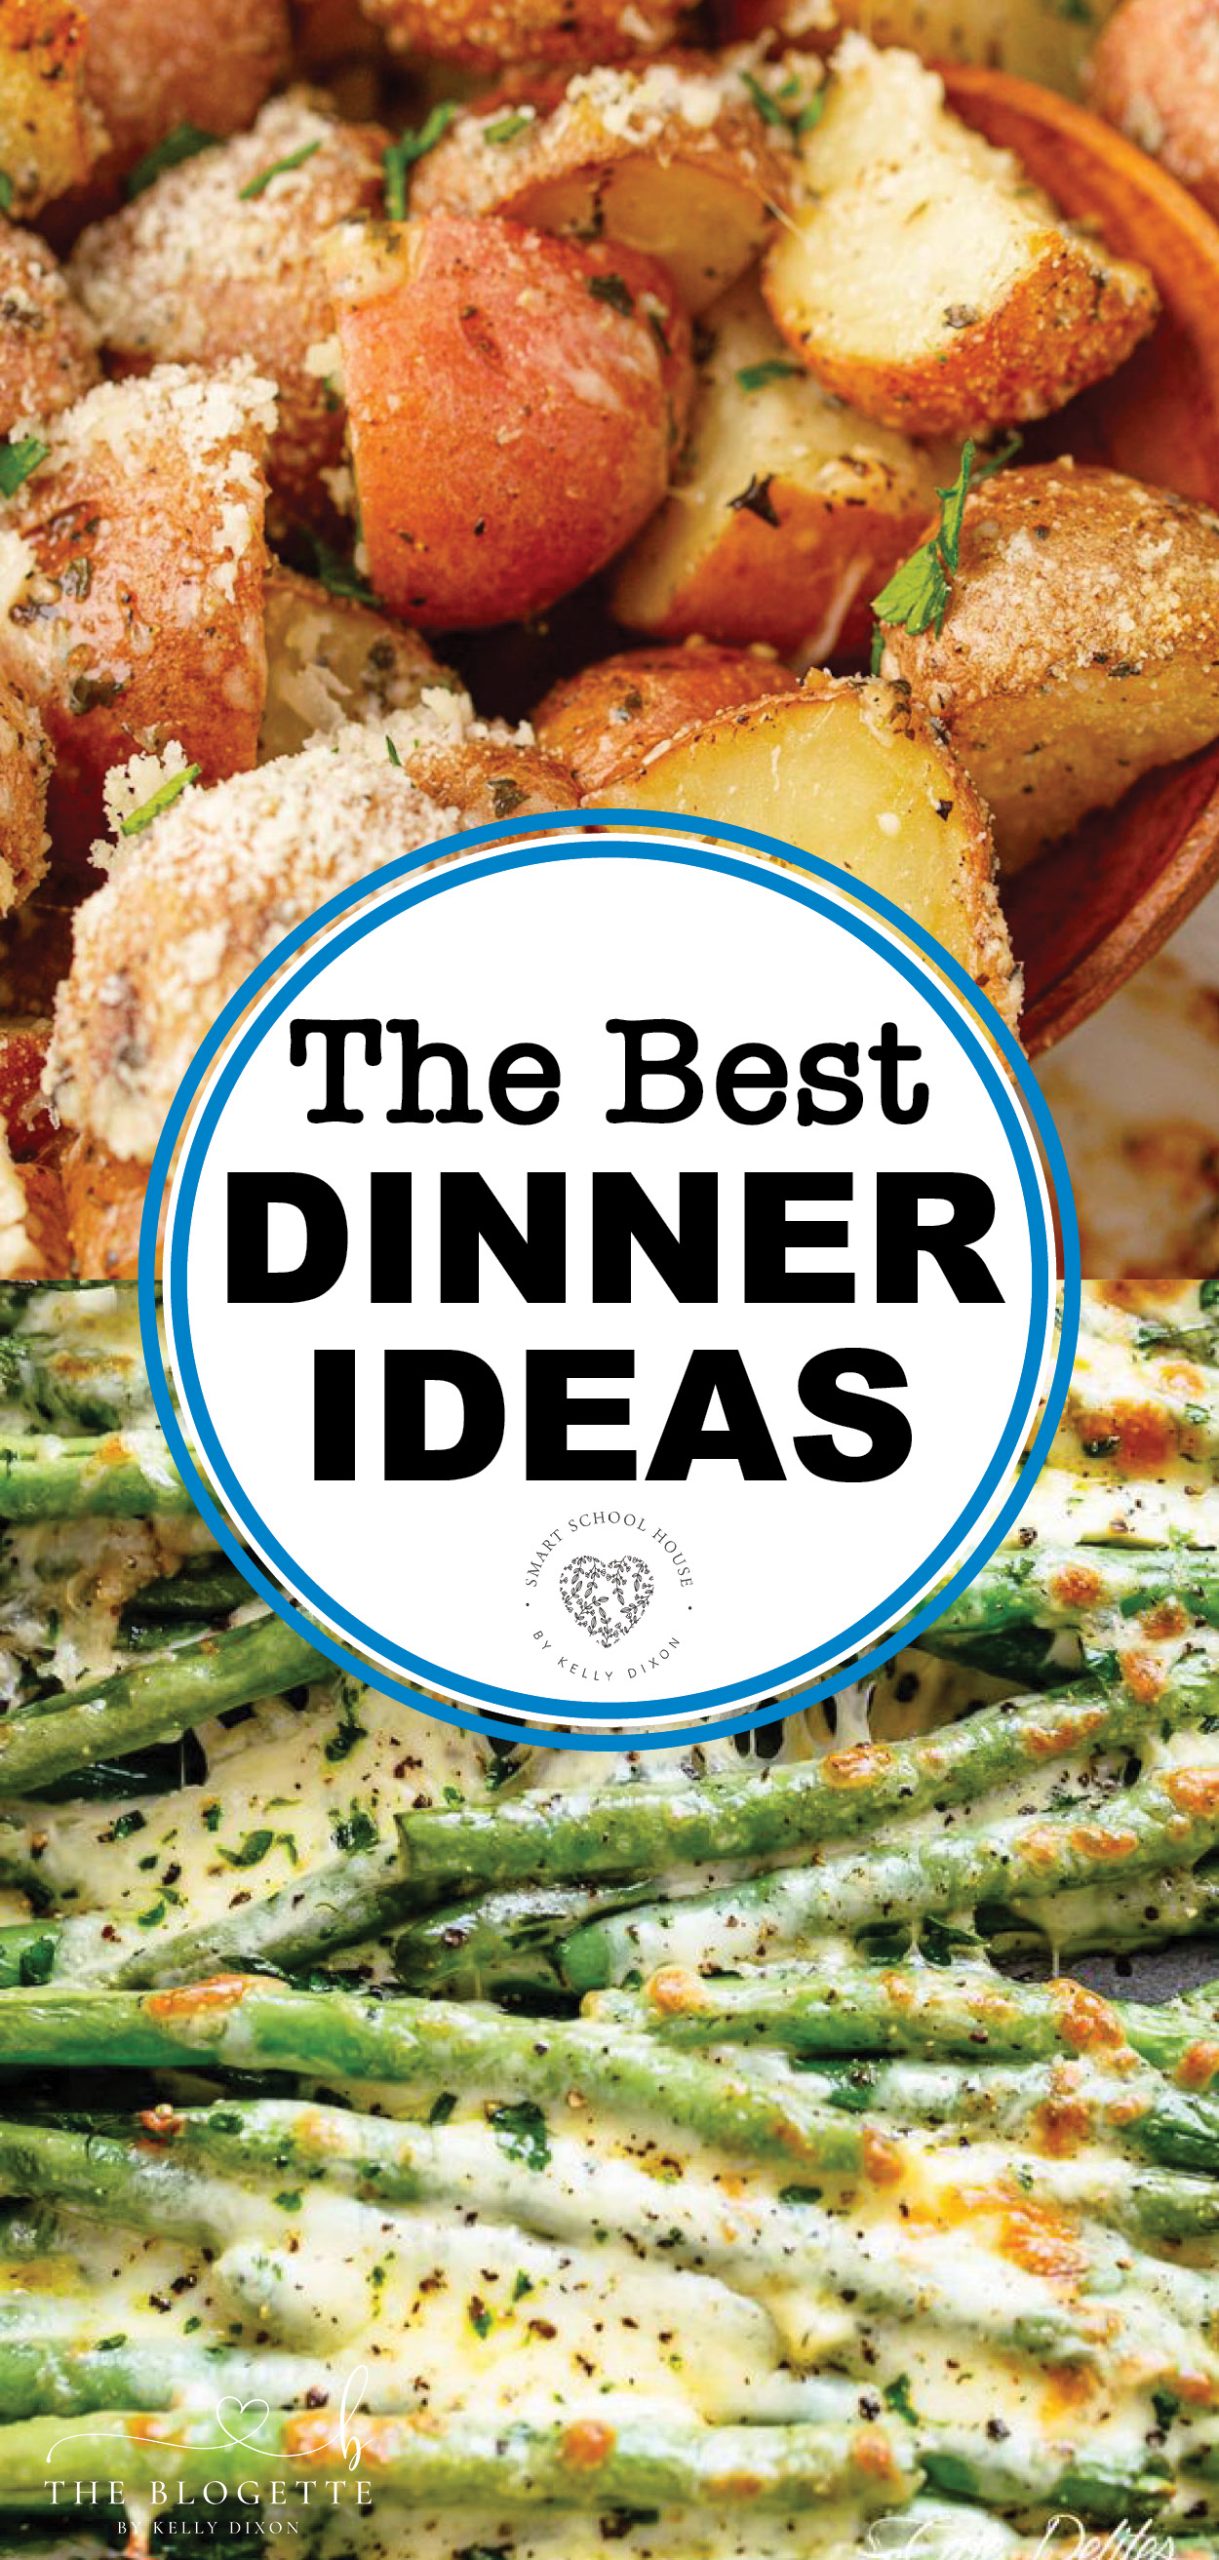 The Best Dinner Ideas